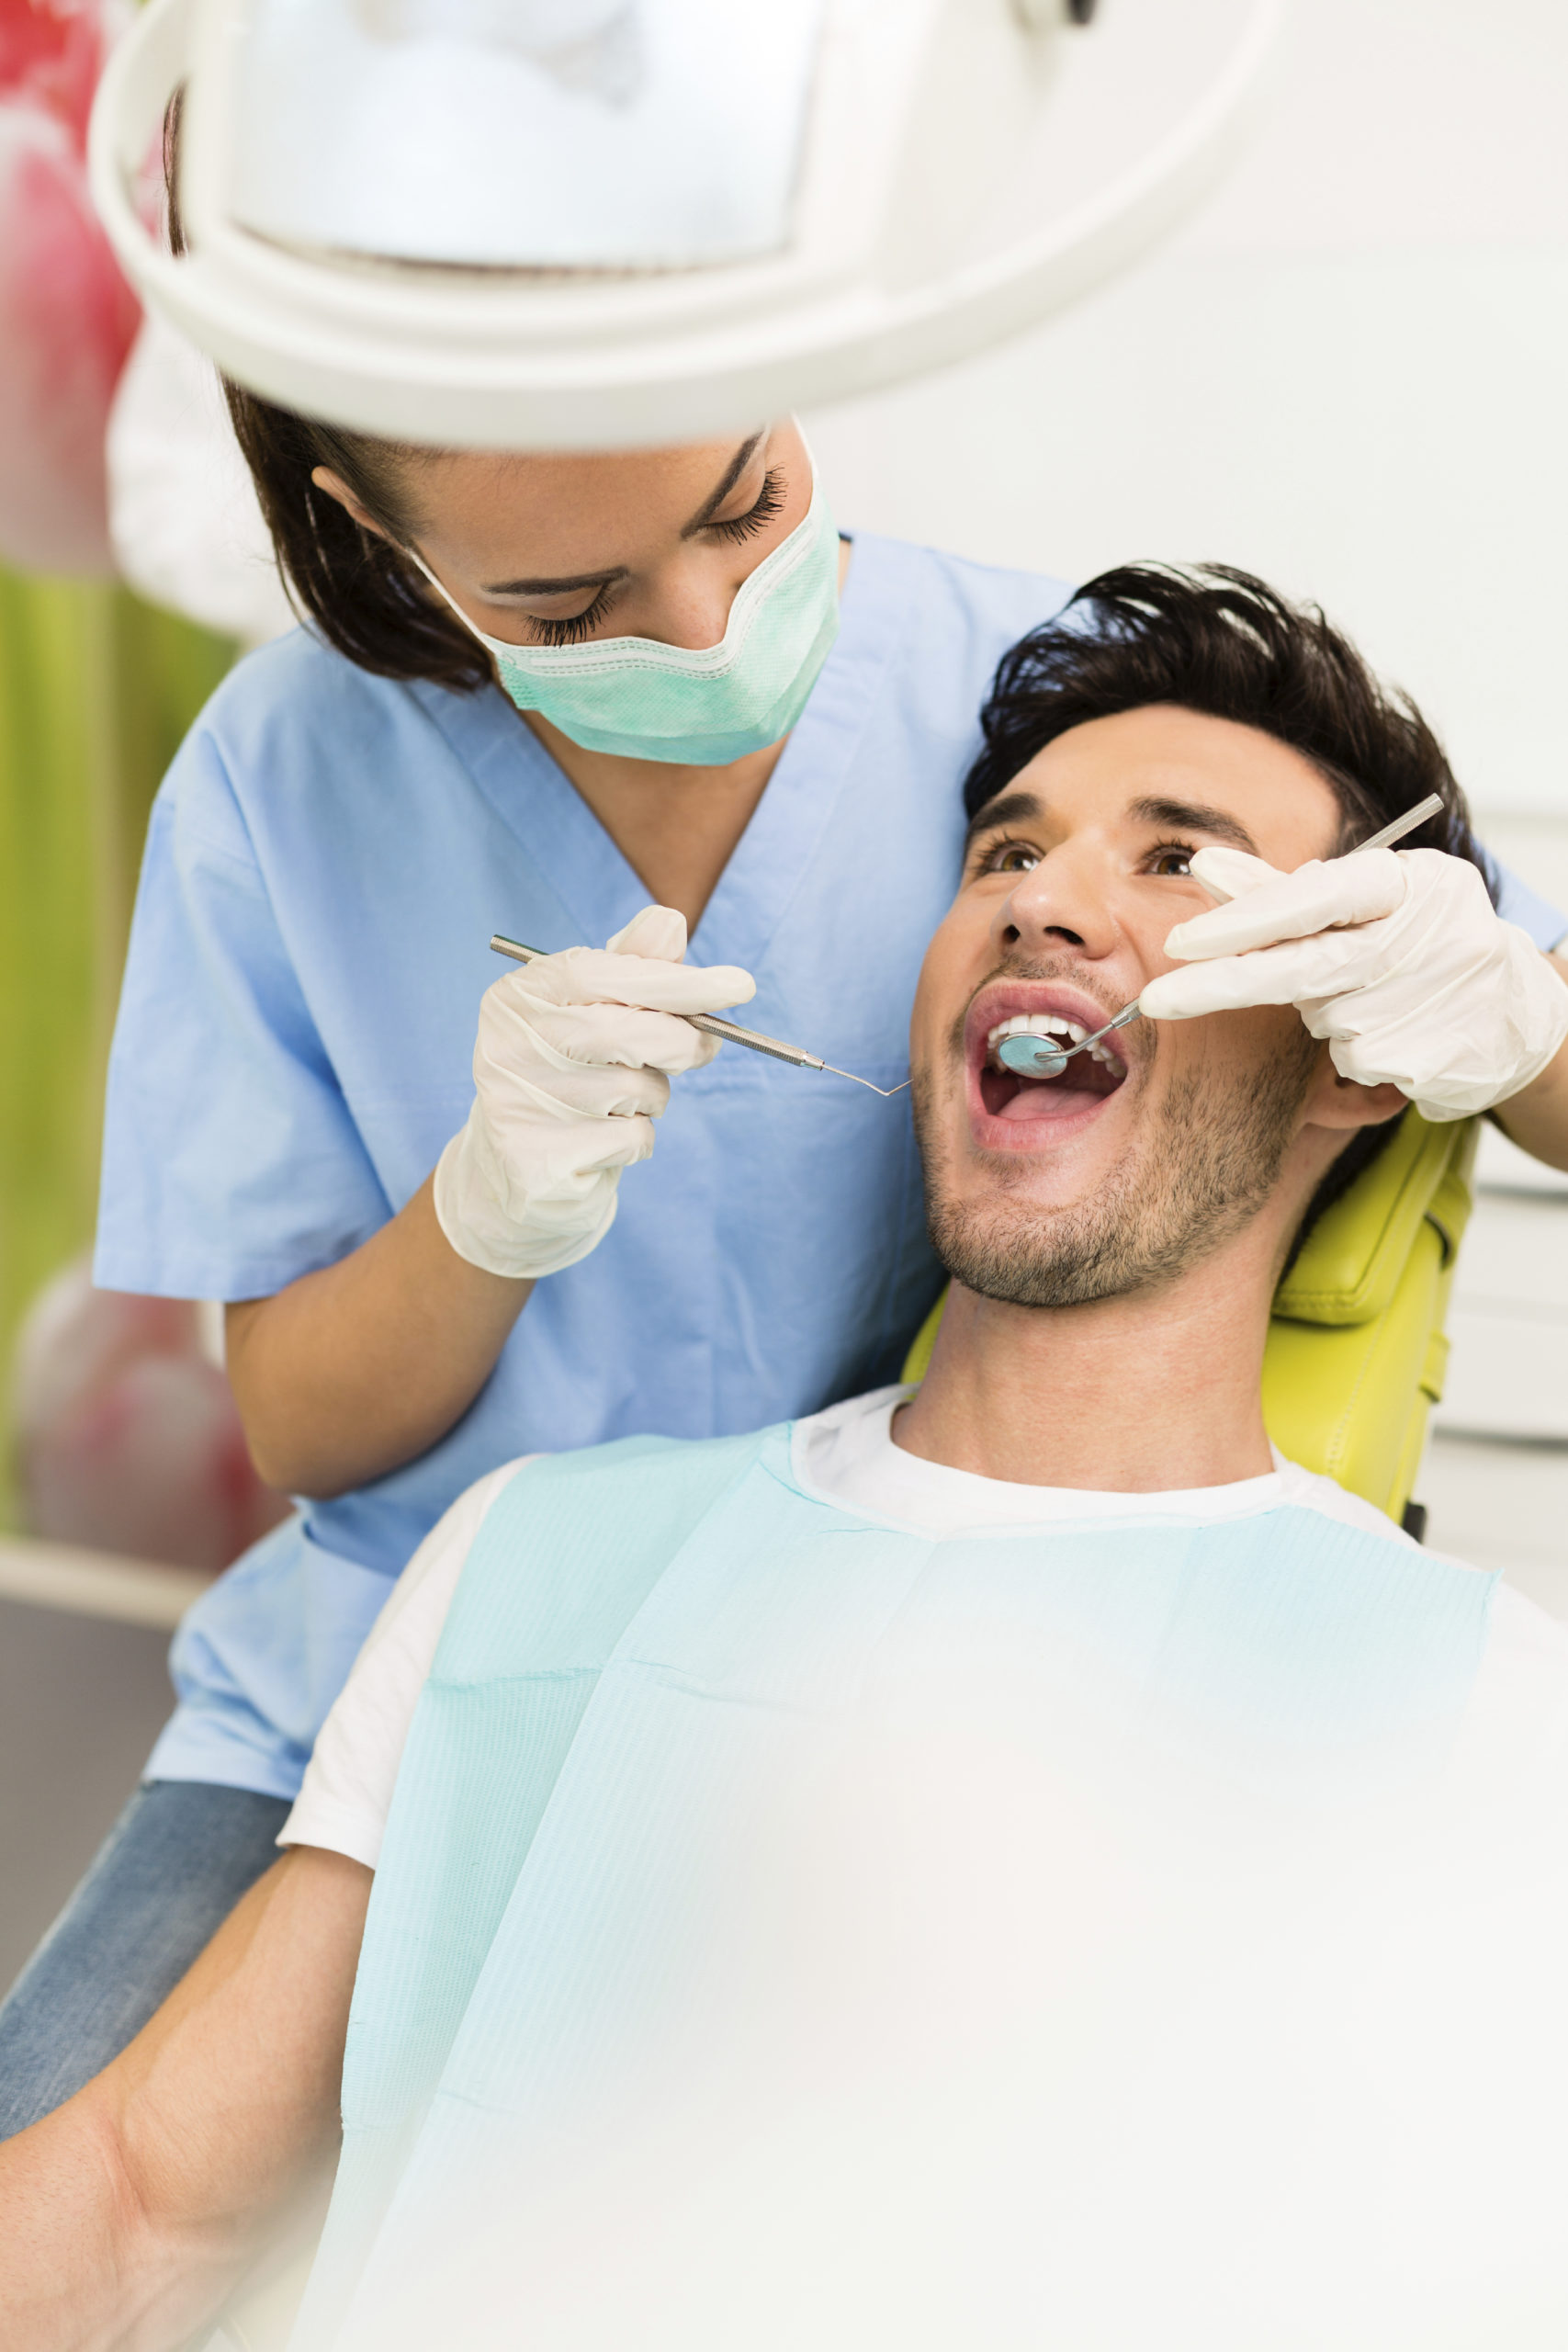 Dentist checking man's teeth